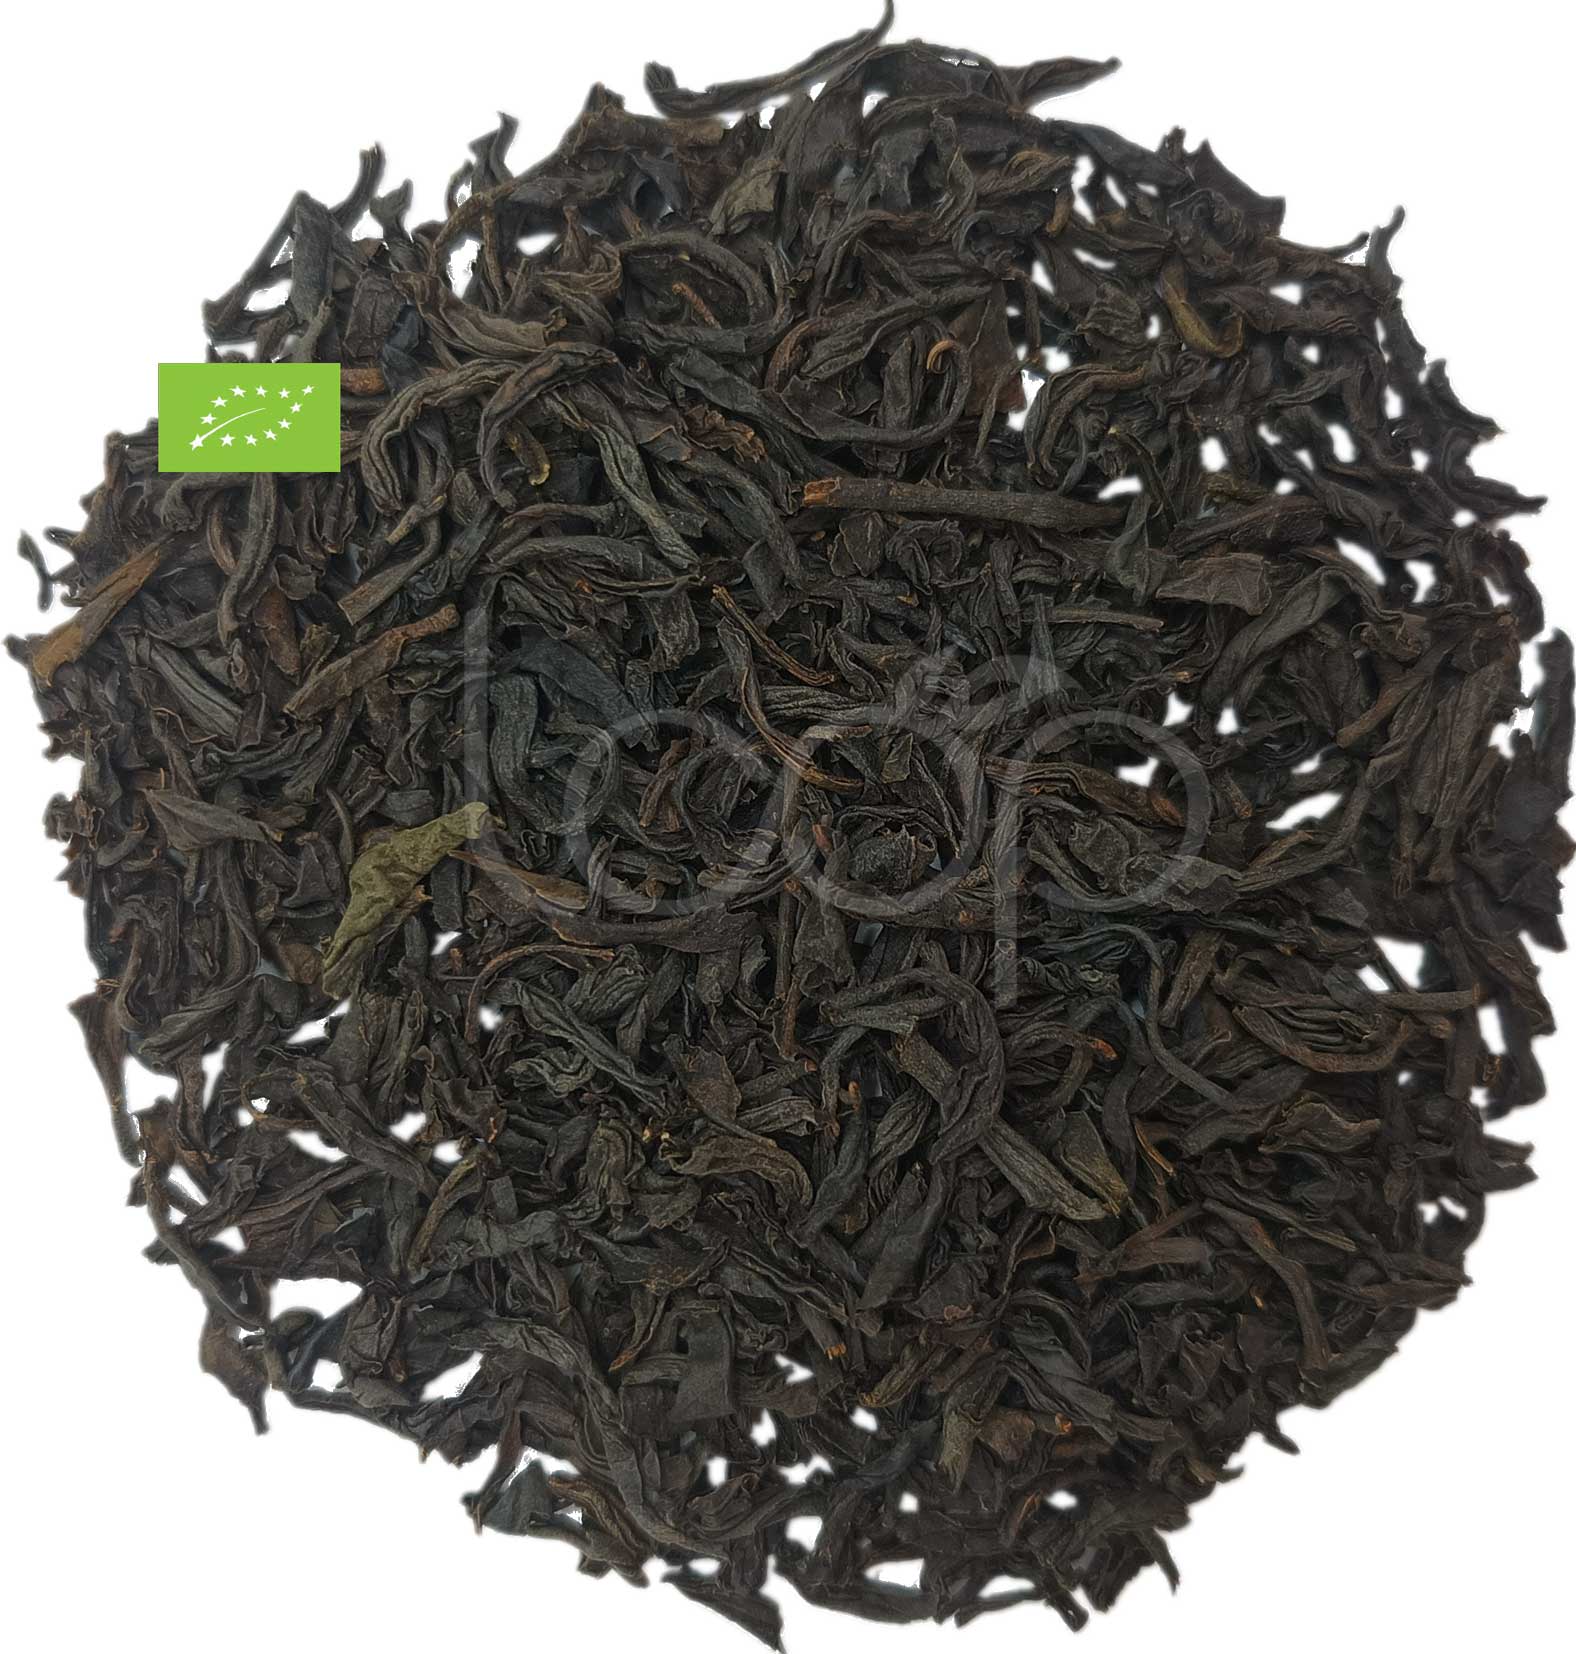 Organic black tea #2